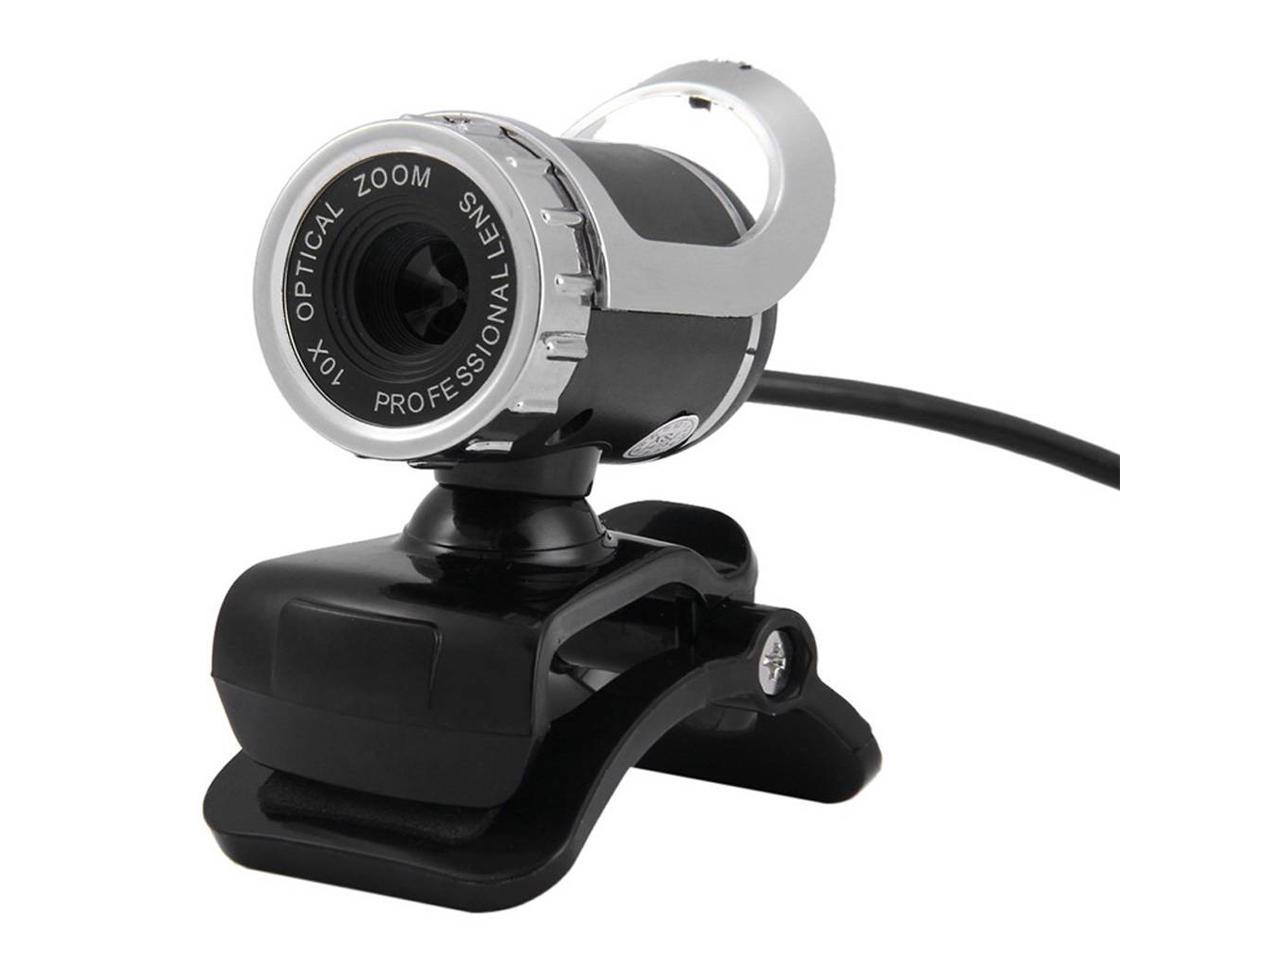 USB Webcam Web Cameras With Mic for Computers Desktop PC Black 